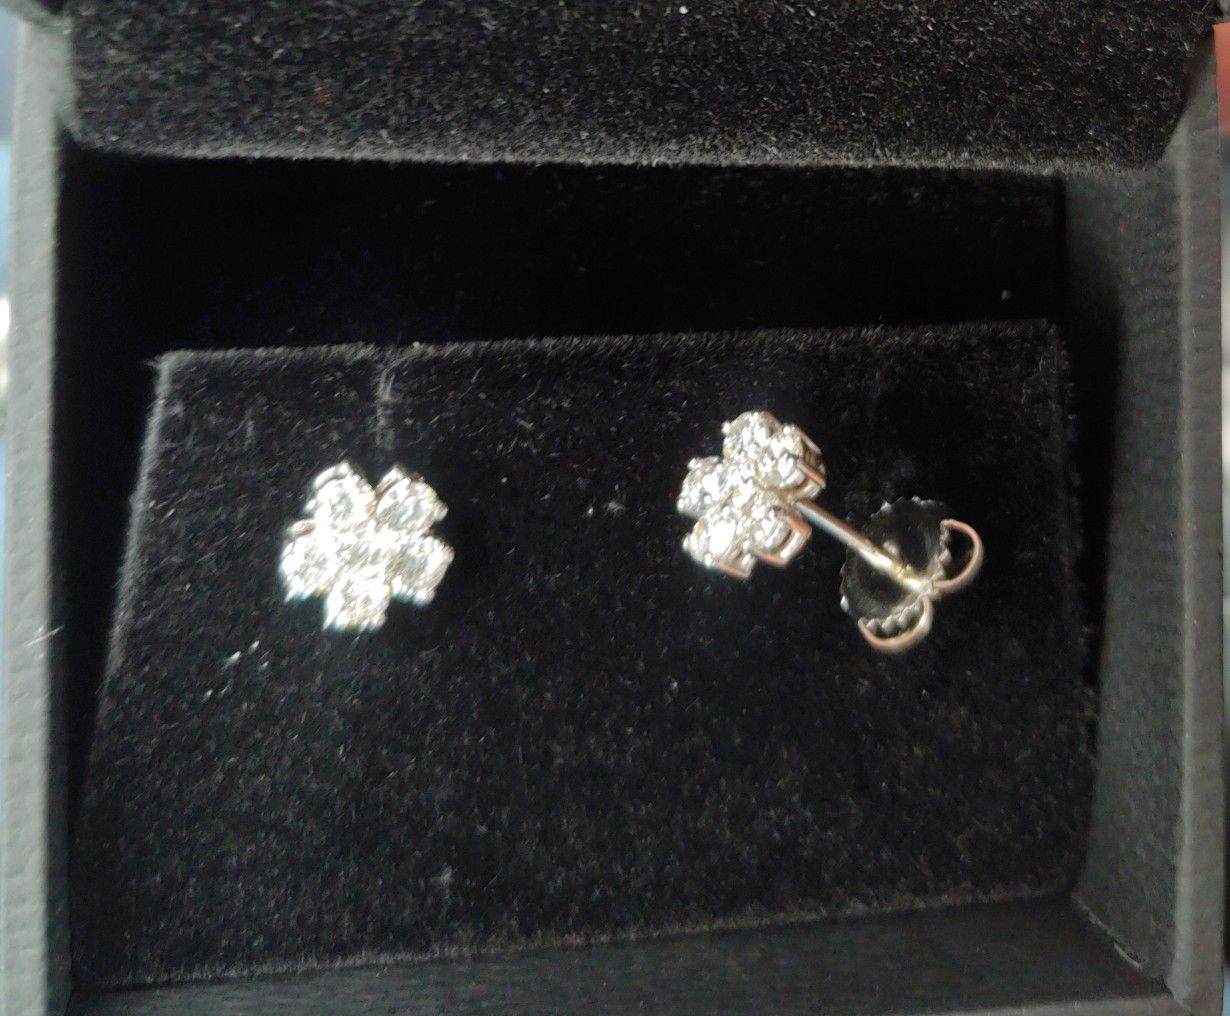 Total 0.94 carat real 12 (6 in each earring) Diamonds & 18K pure white gold earrings w estimate from insurance co